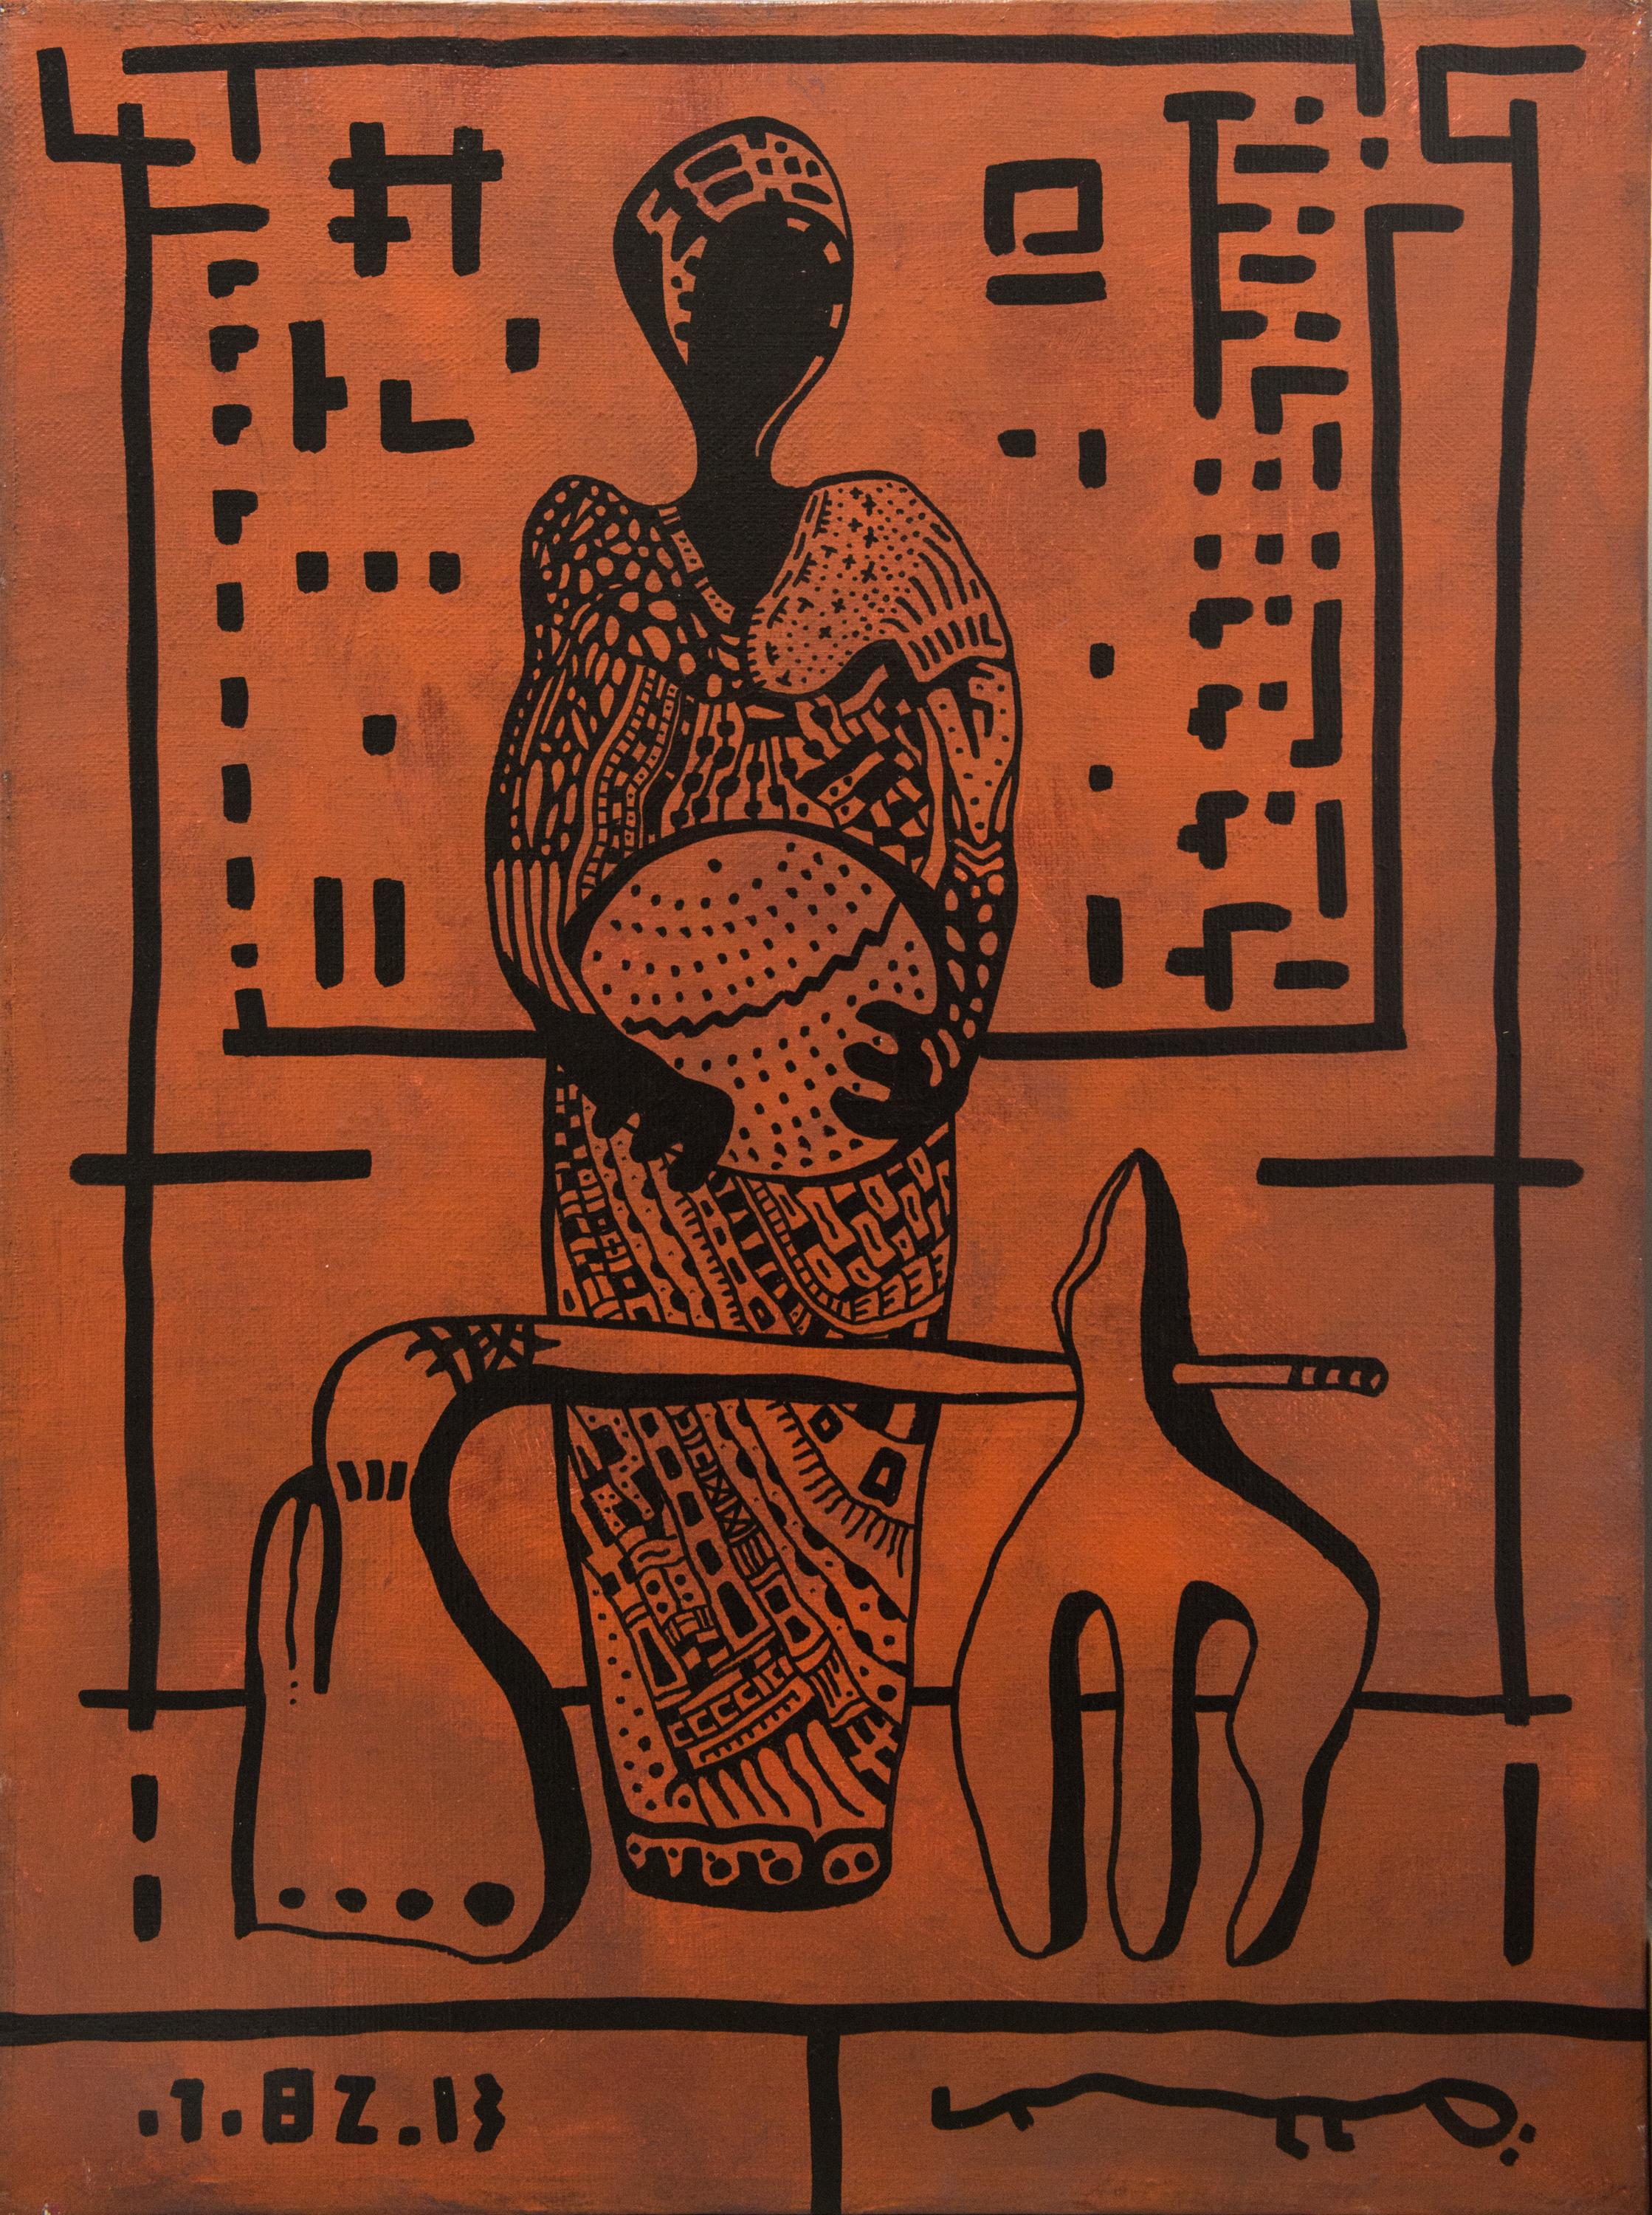 Yuriy Zakordonets Portrait Painting - Venus, Contemporary Abstract Art Painting Canvas Portrait Orange Brown Graphic